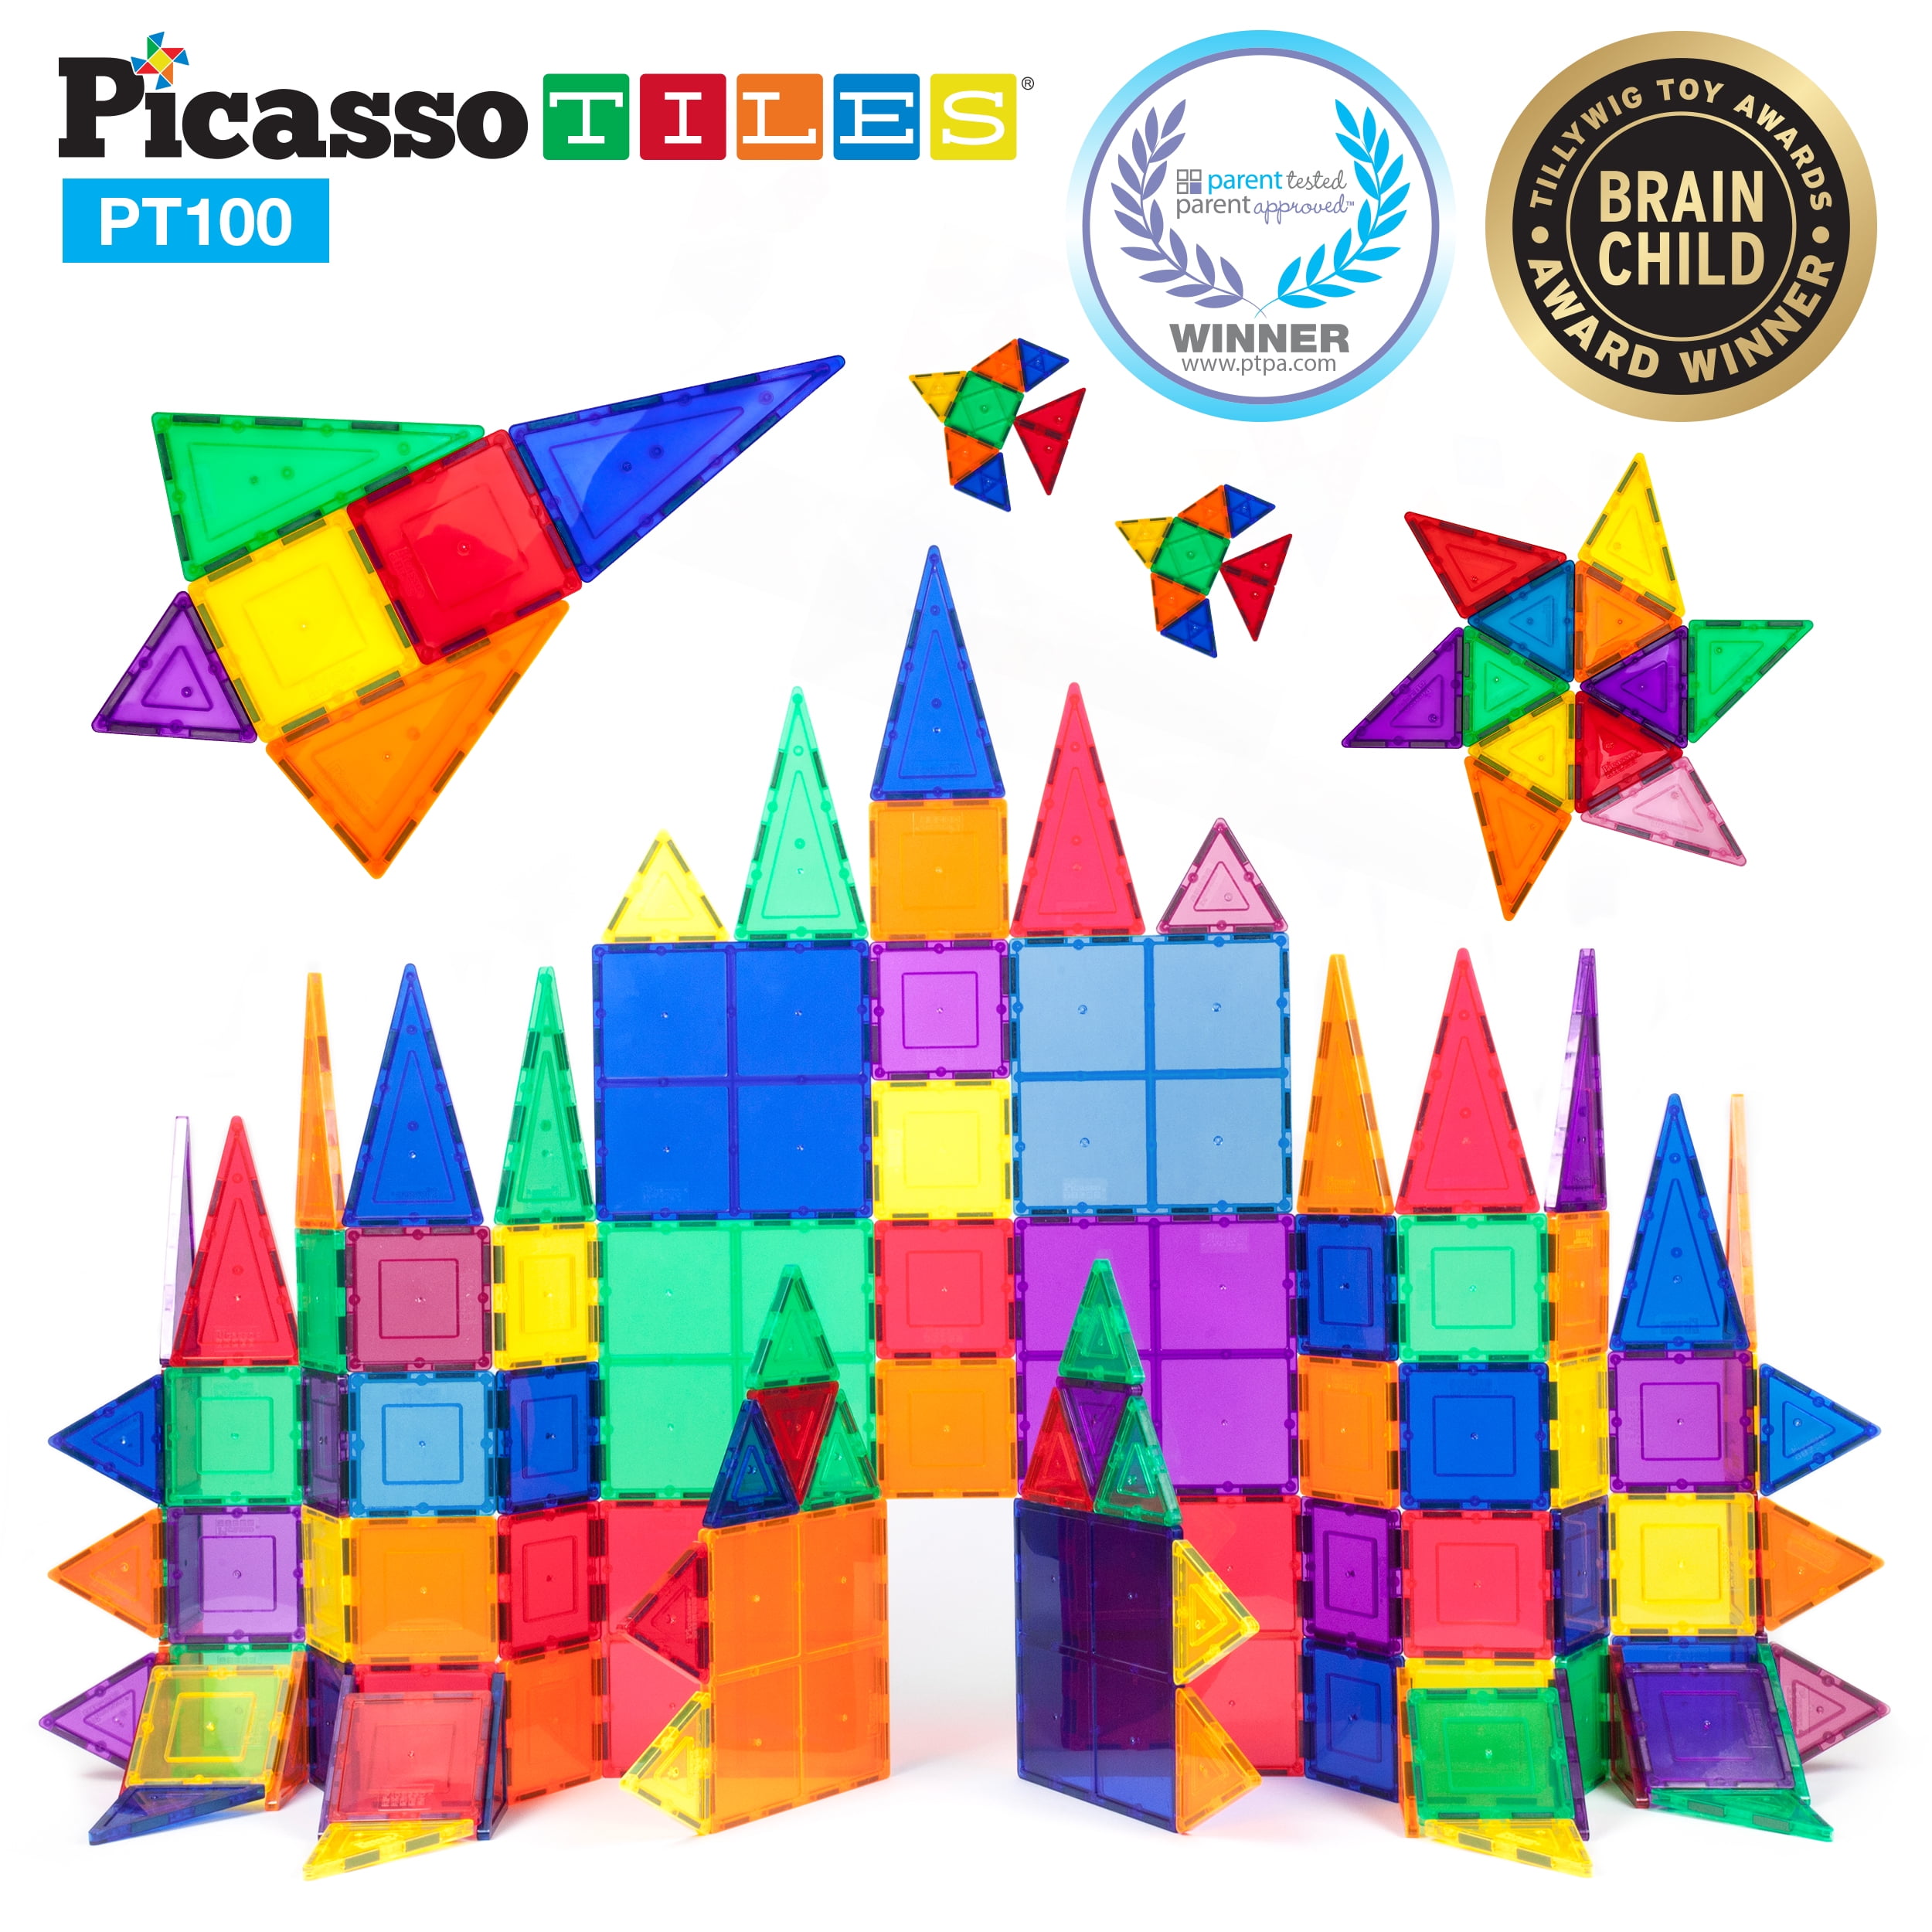 100pcs Magnetic Building Blocks Toy Set 3D Tiles DIY Toys Gift for Kids Children 